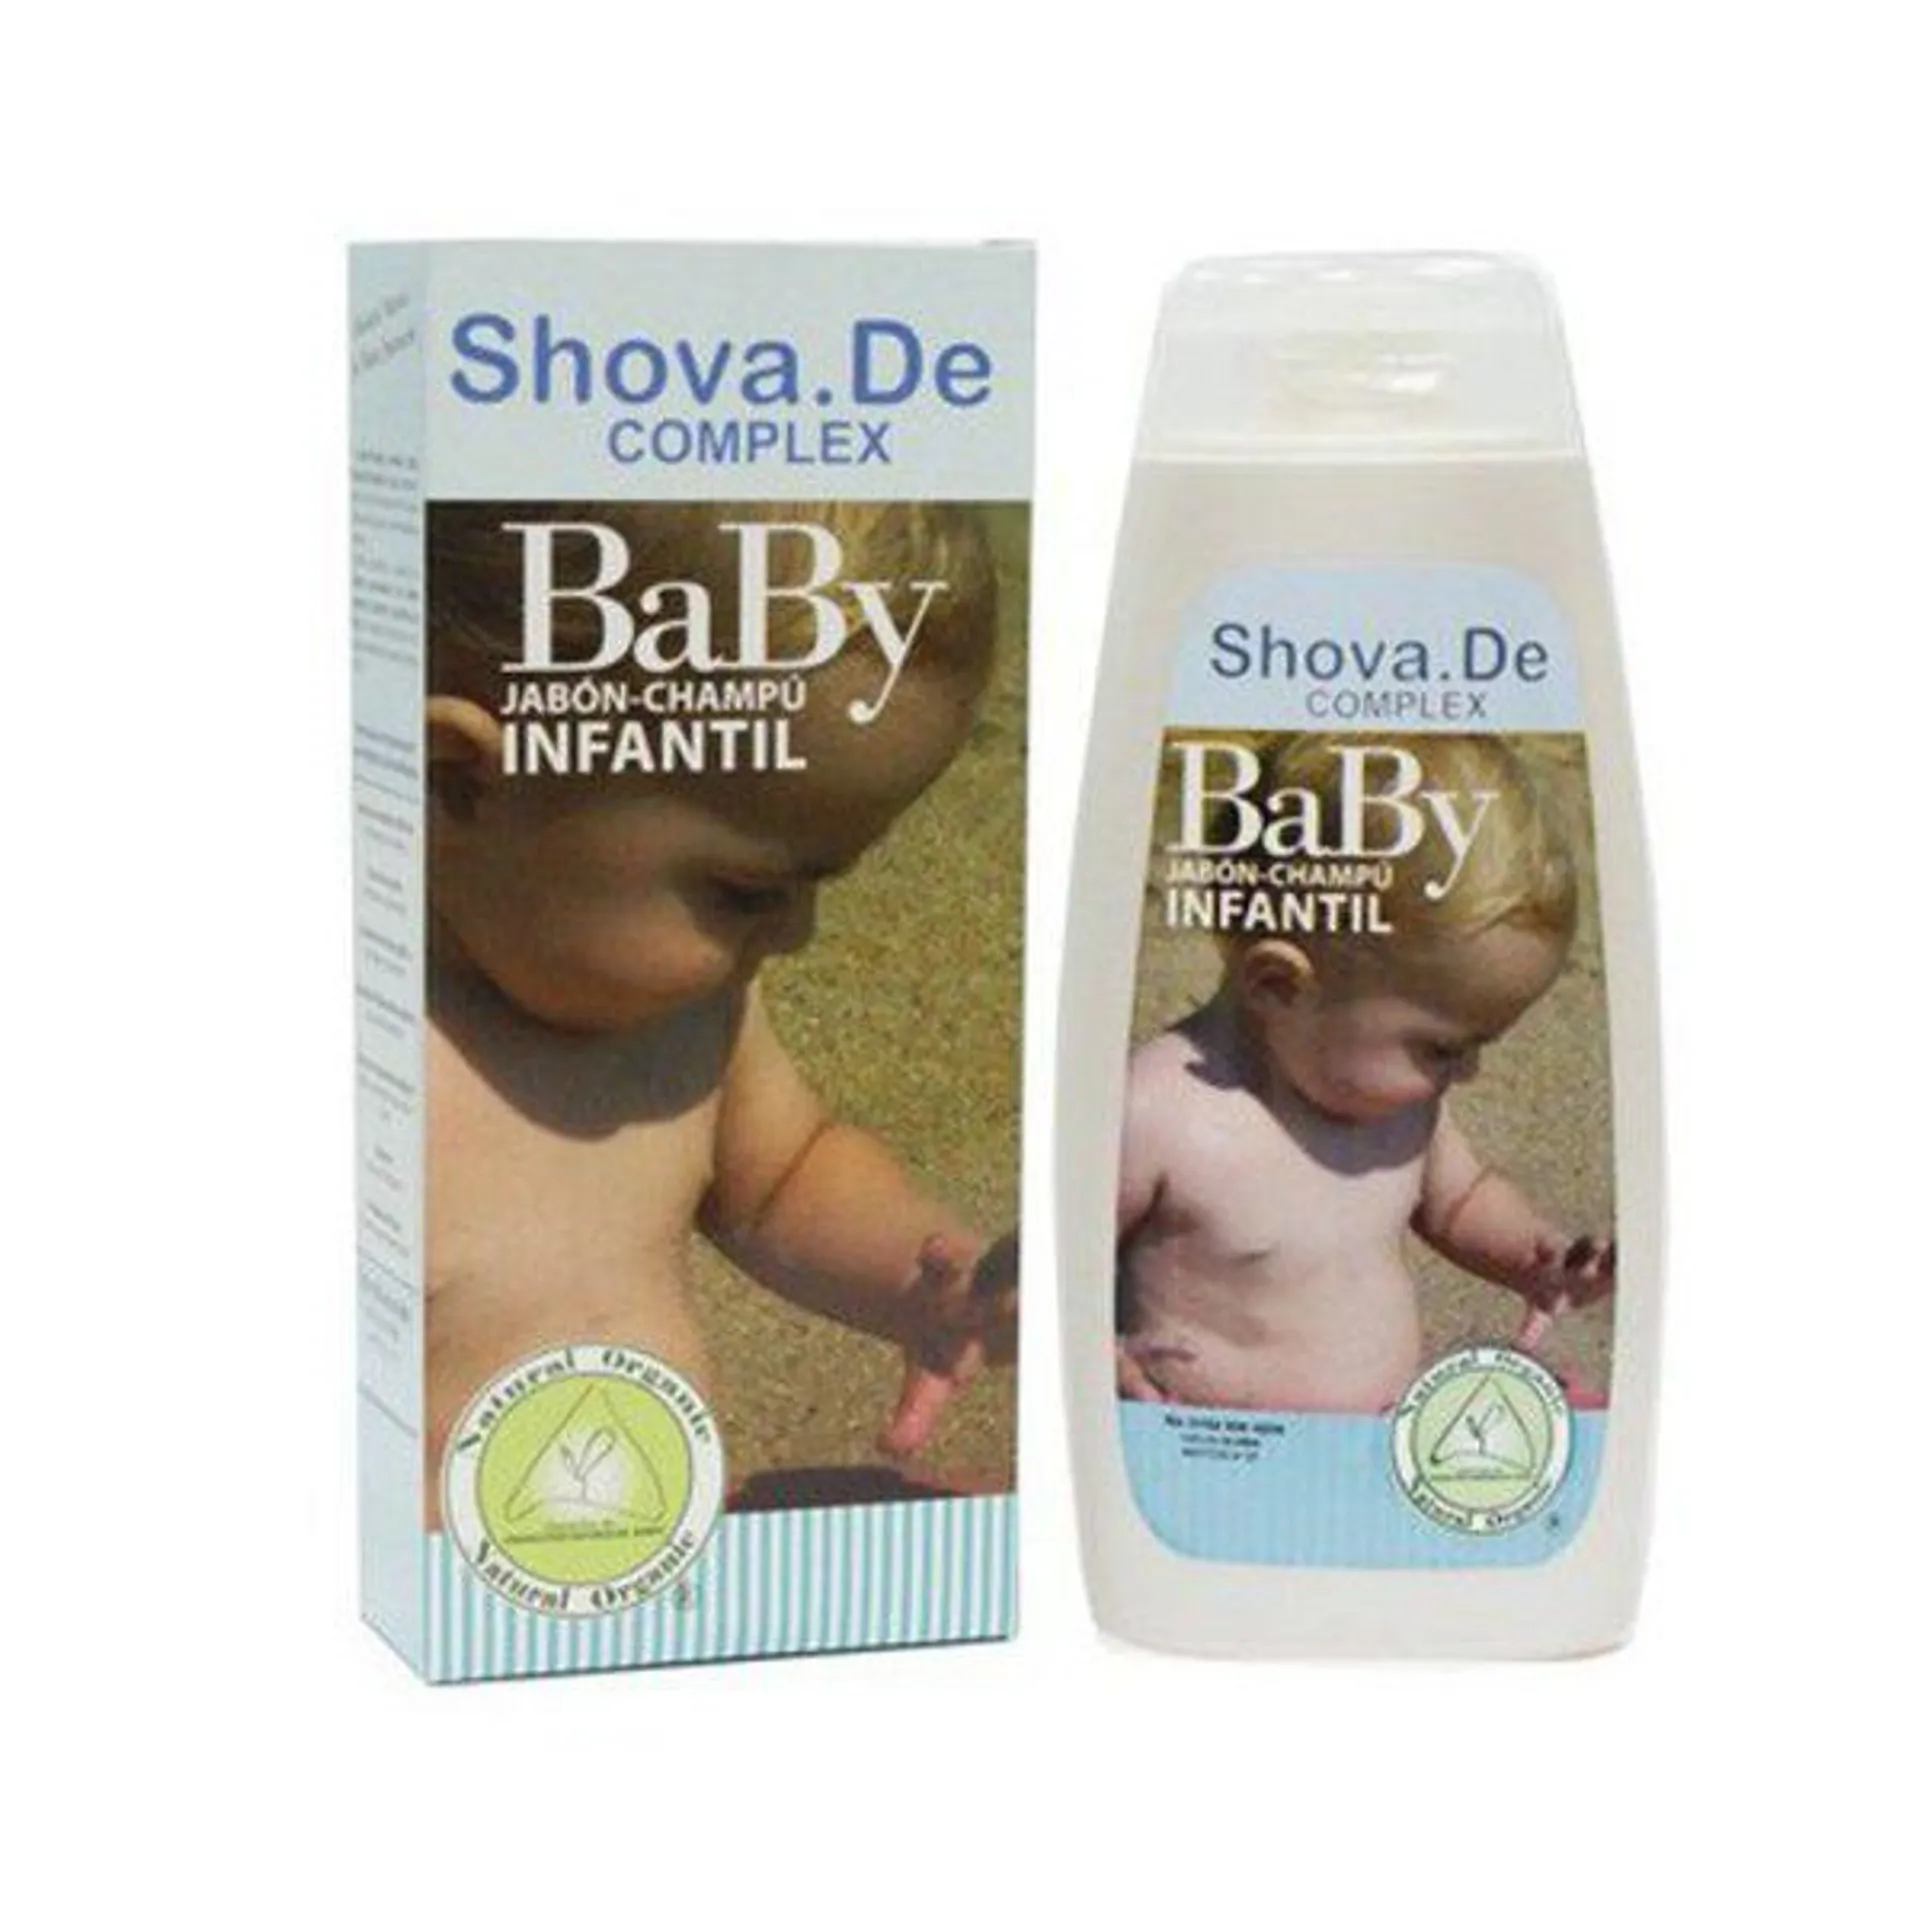 BABY JABON-CHAMPU INFANTIL – Shova.De